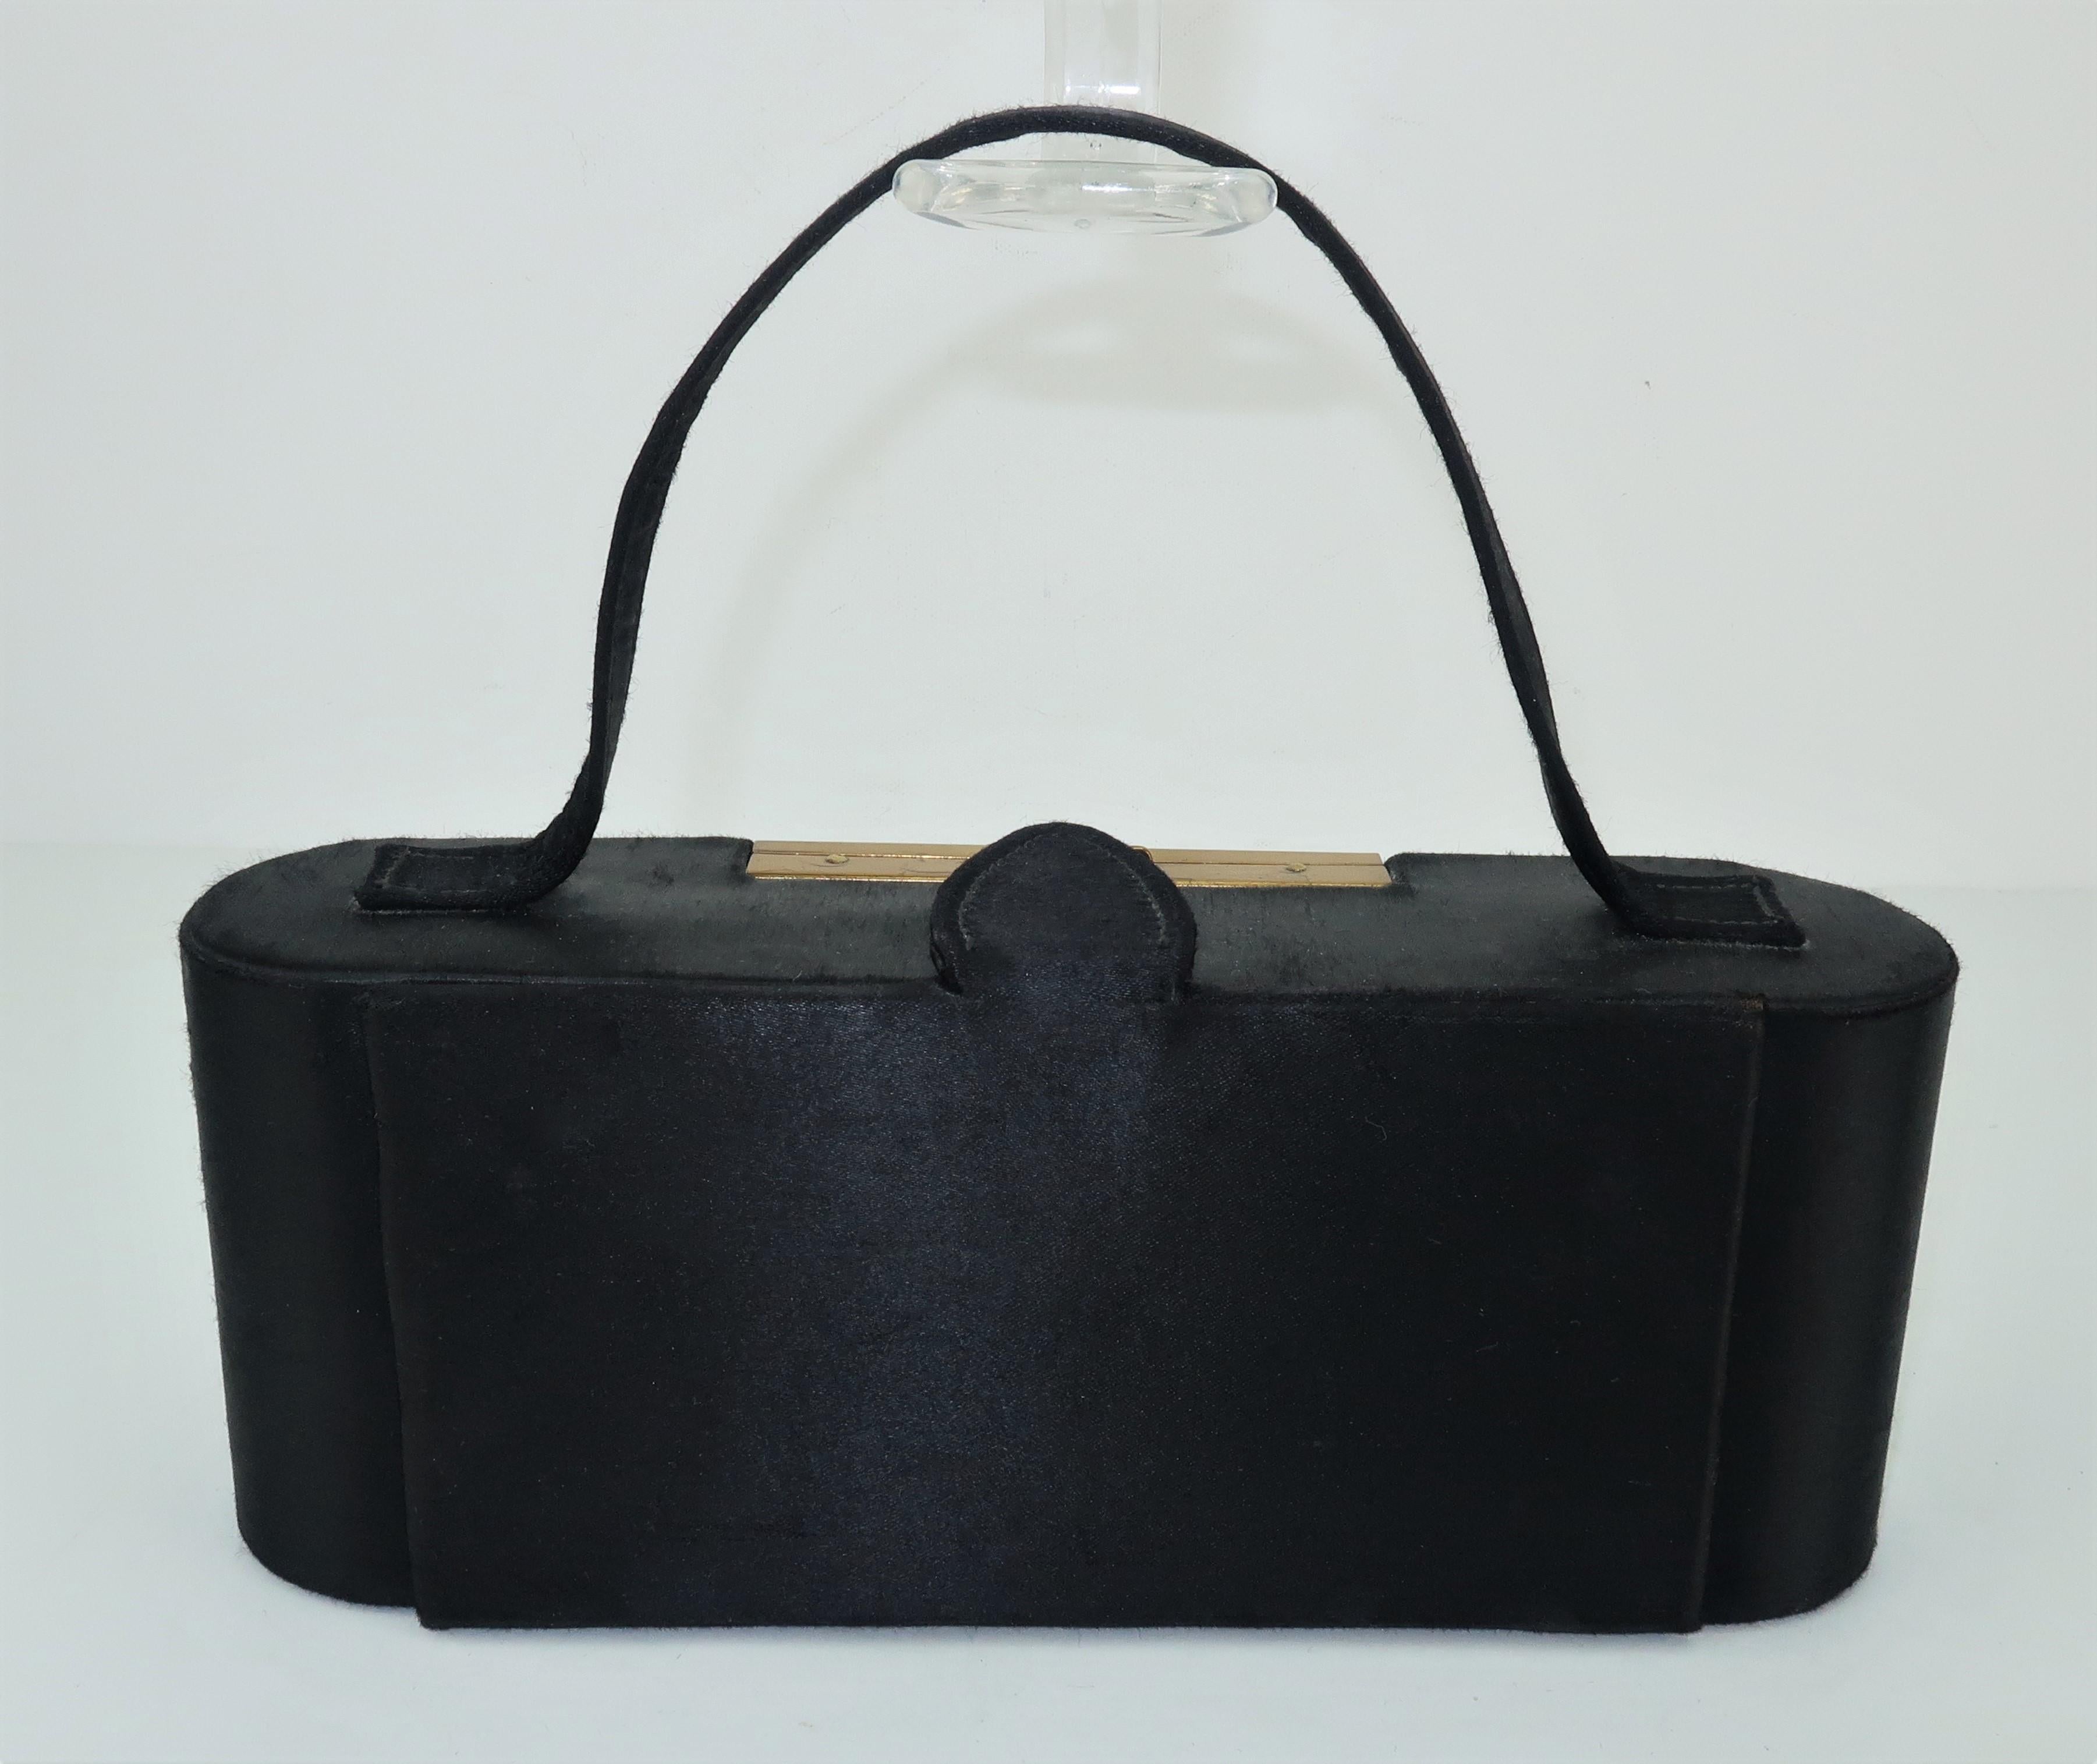 1950's Dorette Mirrored Compact Black Satin Evening Handbag 2